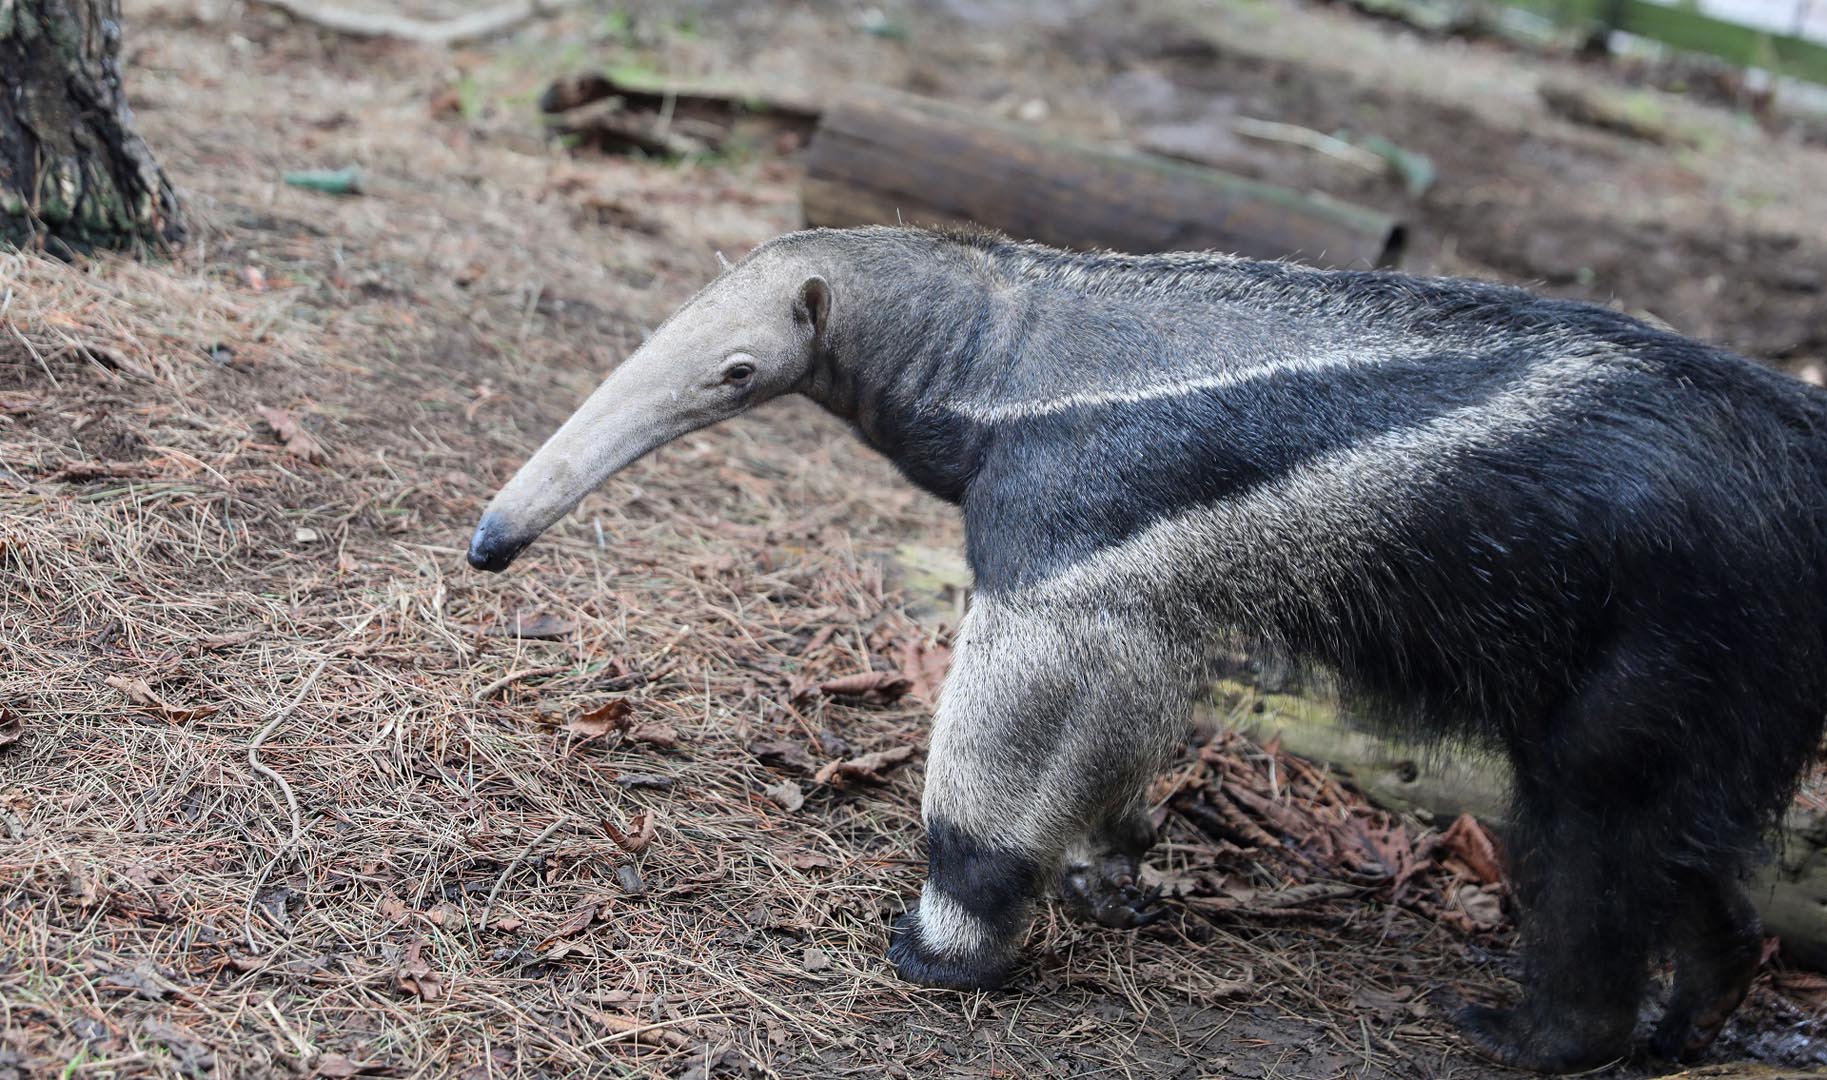 Giant anteater walking through enclosure with bare ground beneath Image: ALLIE MCGREGOR 2024